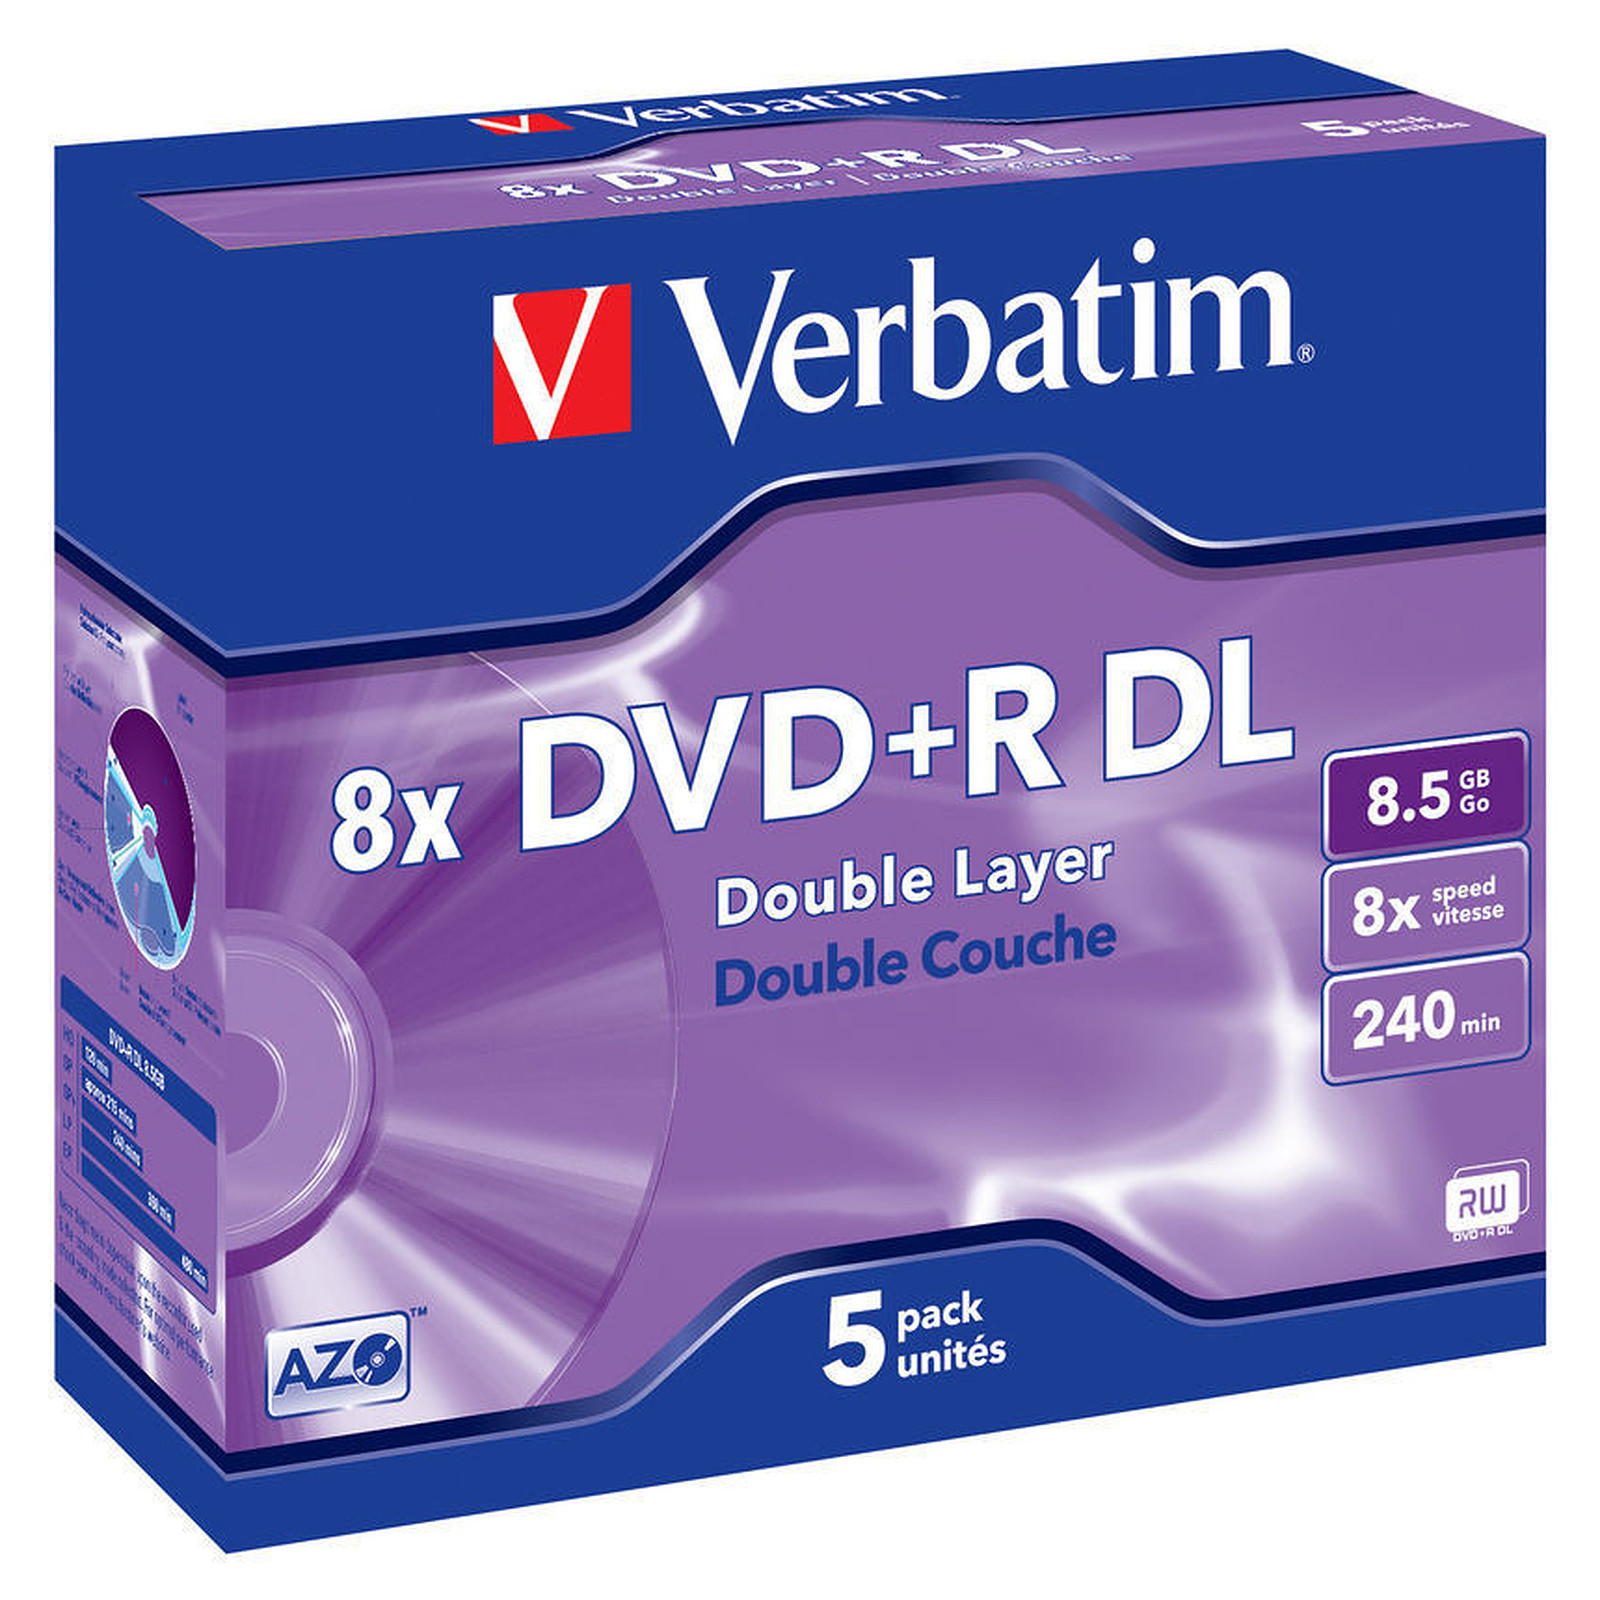 Verbatim DVD+R DL 8.5 Go 8x 240 min (par 5, boitier jewel) - DVD vierge Verbatim